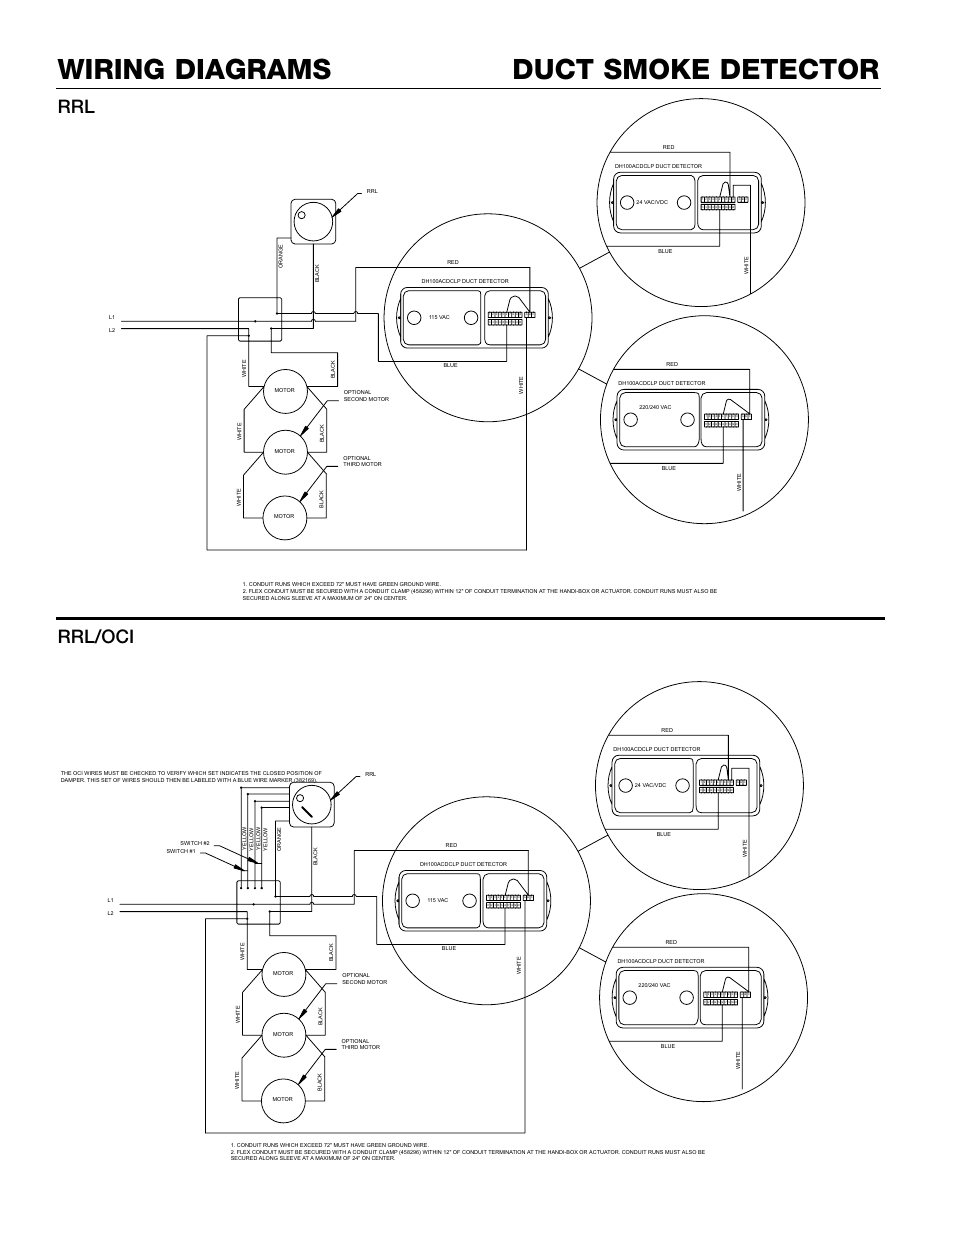 34 Duct Smoke Detector Wiring Diagram